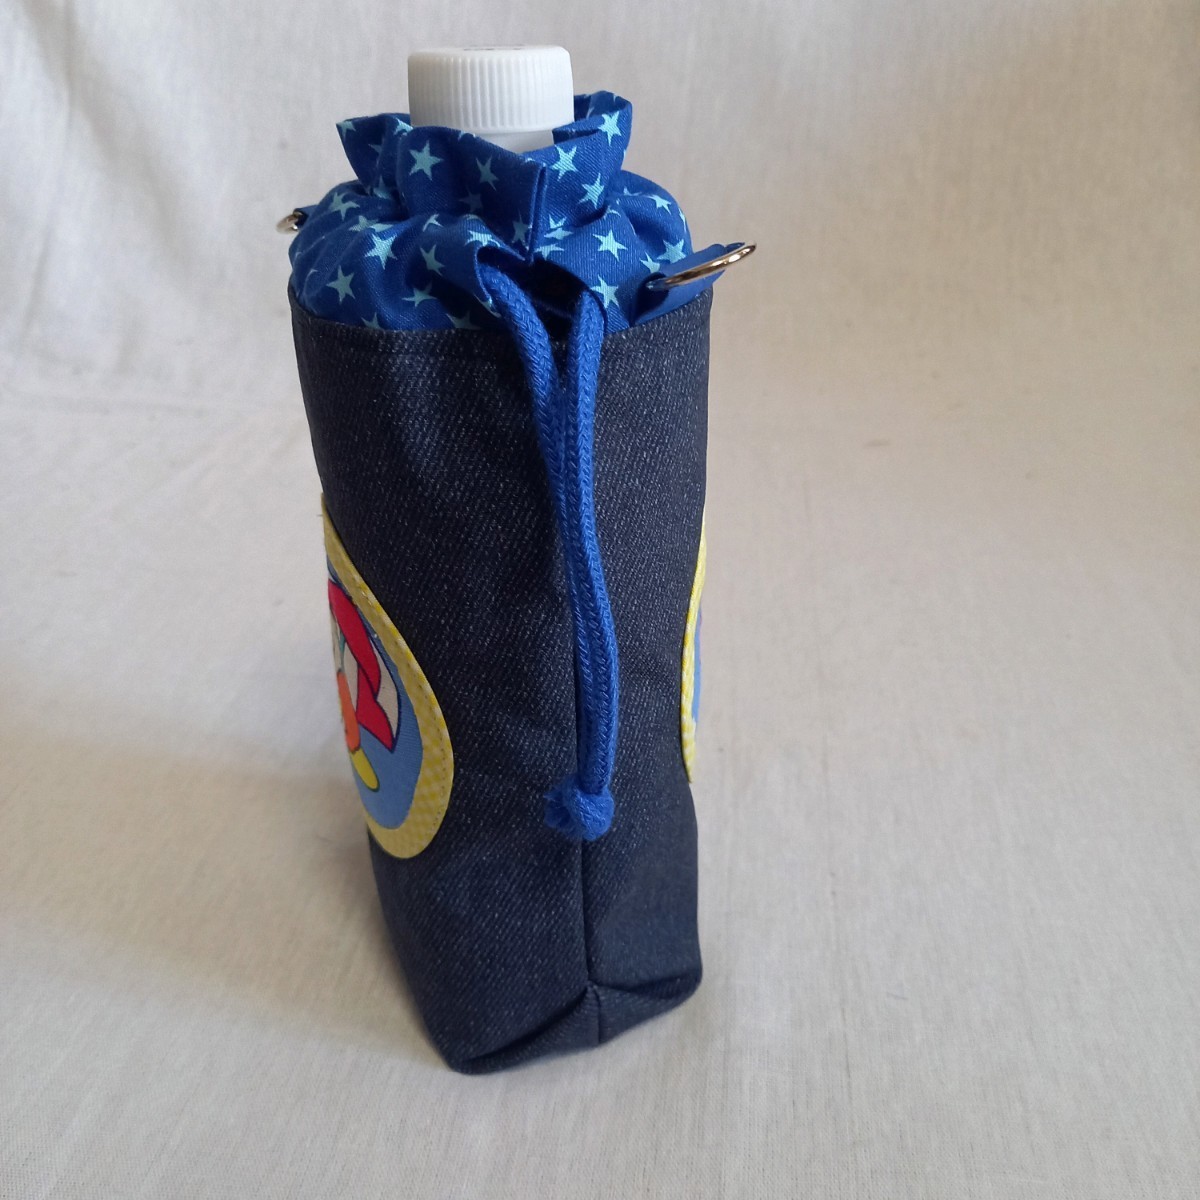  waterproof function cloth use * handmade * keep cool heat insulation pet bottle holder * car bi.&wado Rudy * badge type 